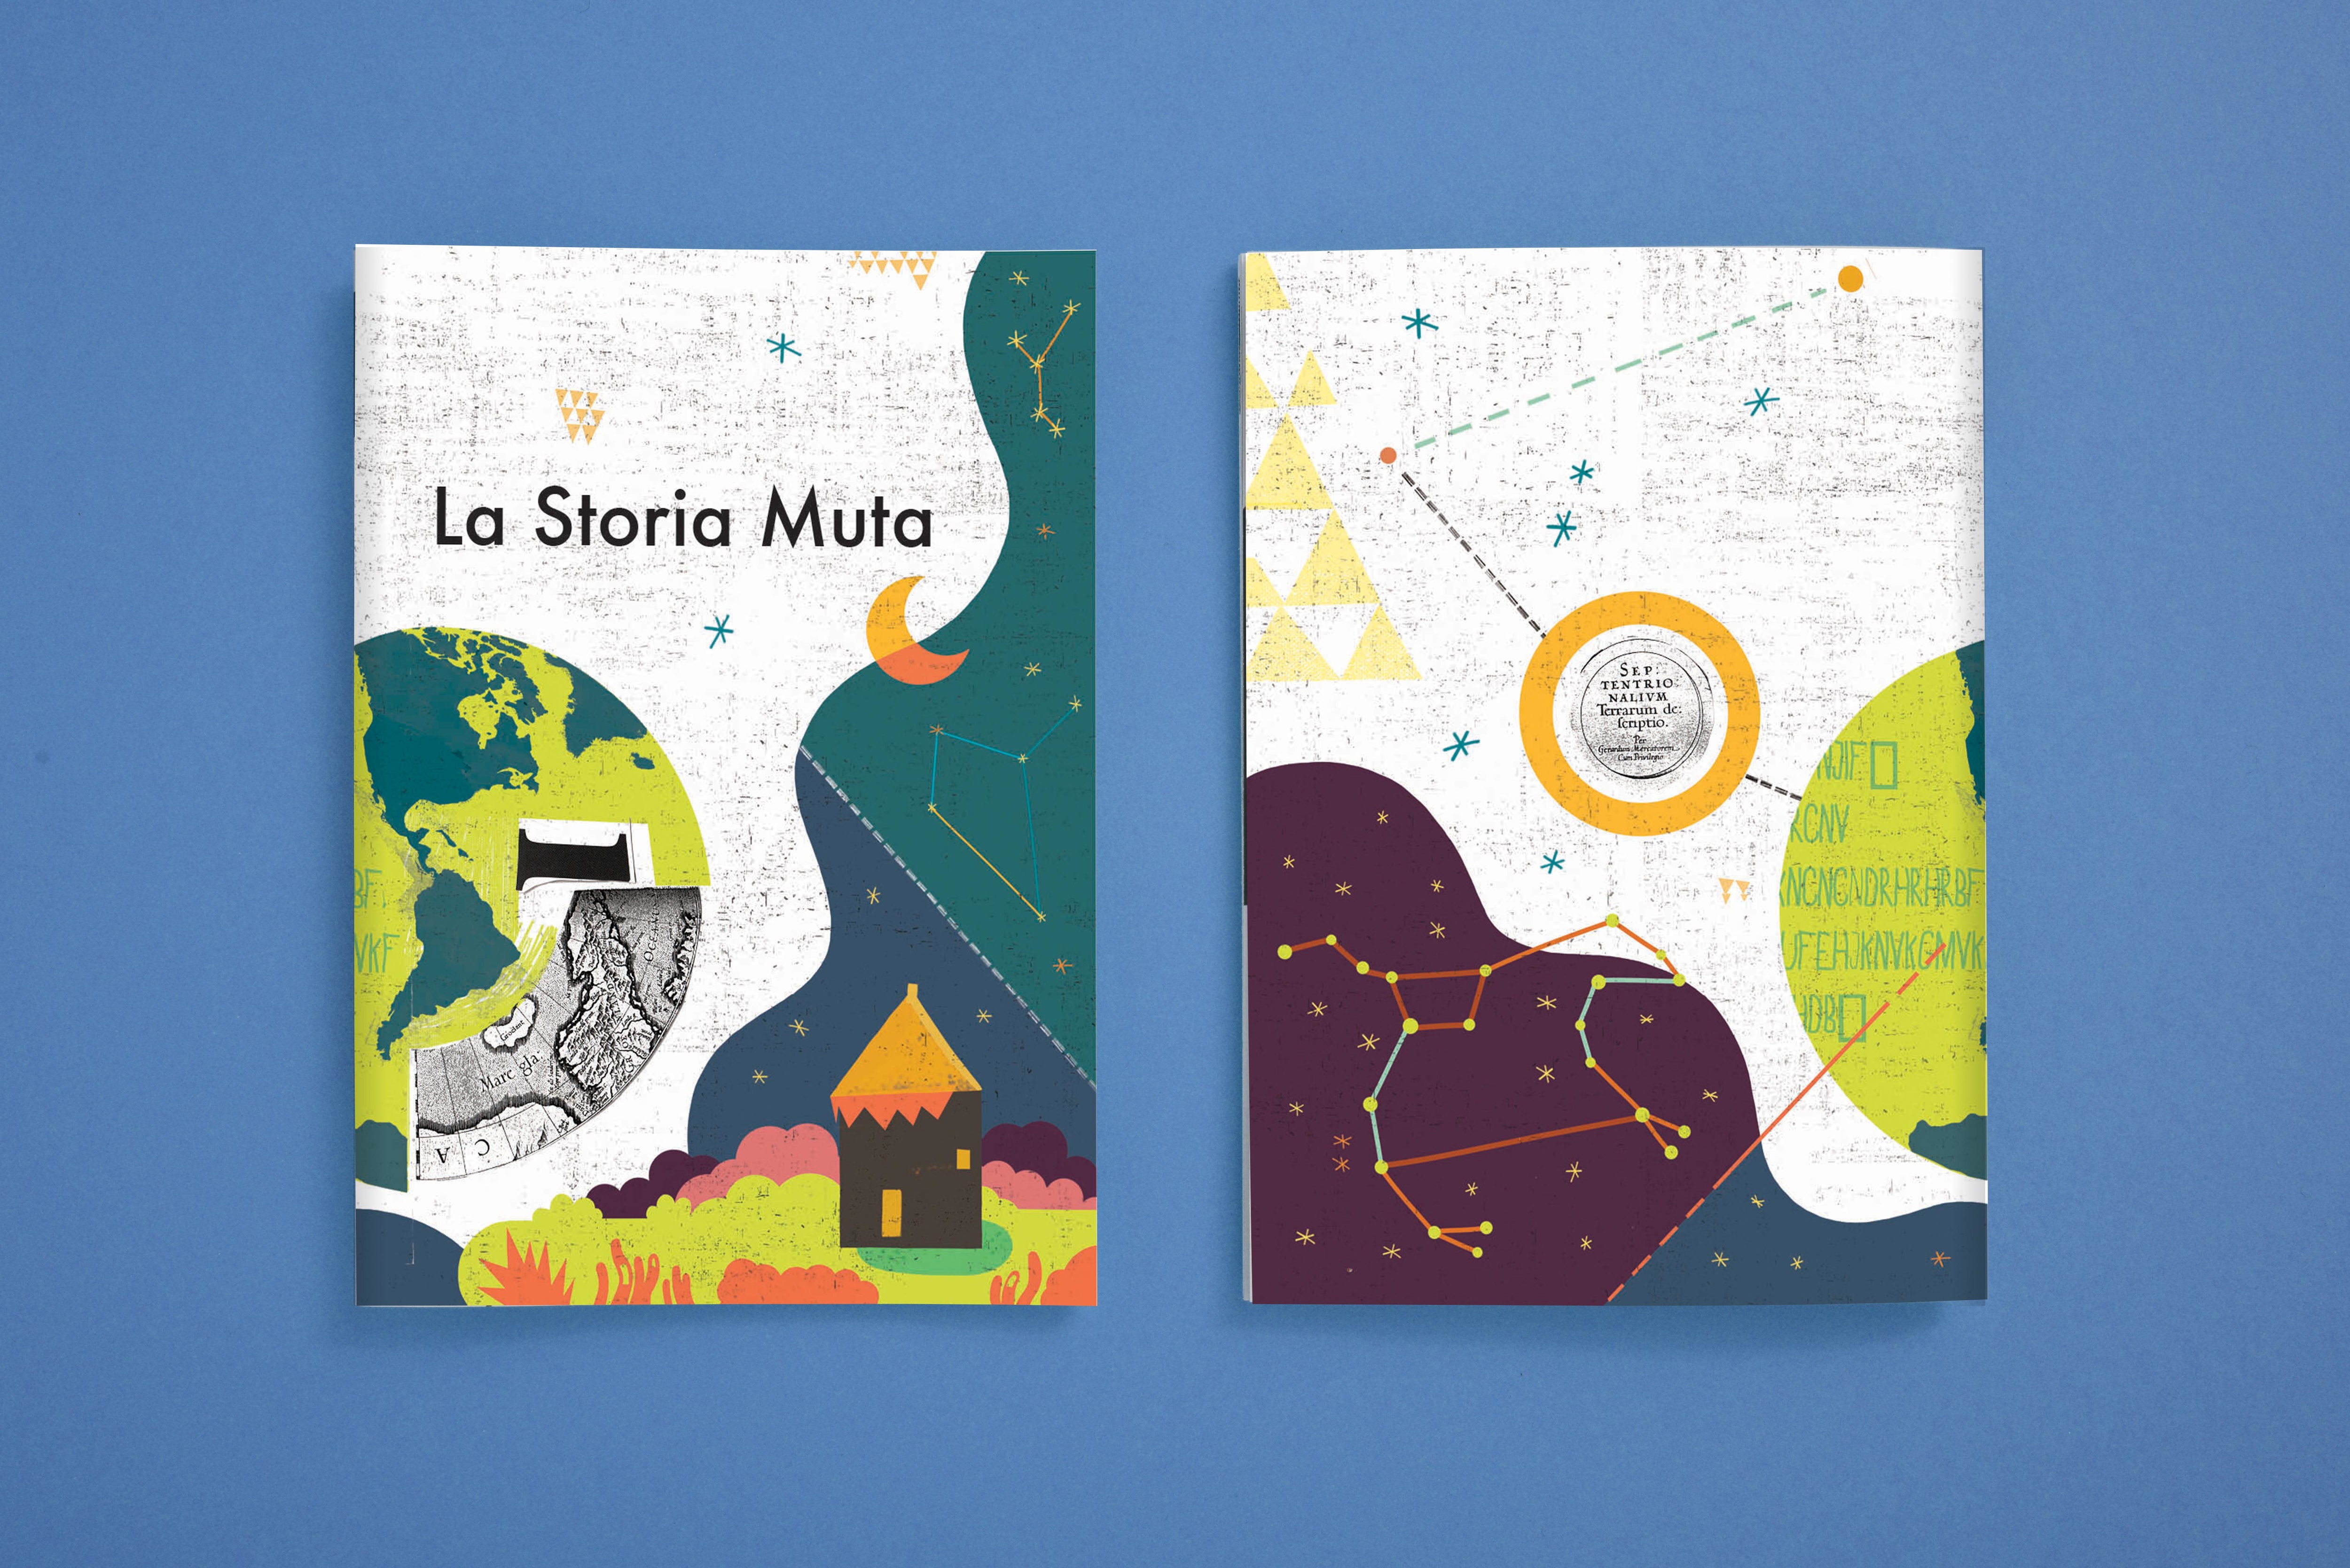 “La Storia Muta”, scritta da Lara Caputo e illustrata da Silvia Mauri